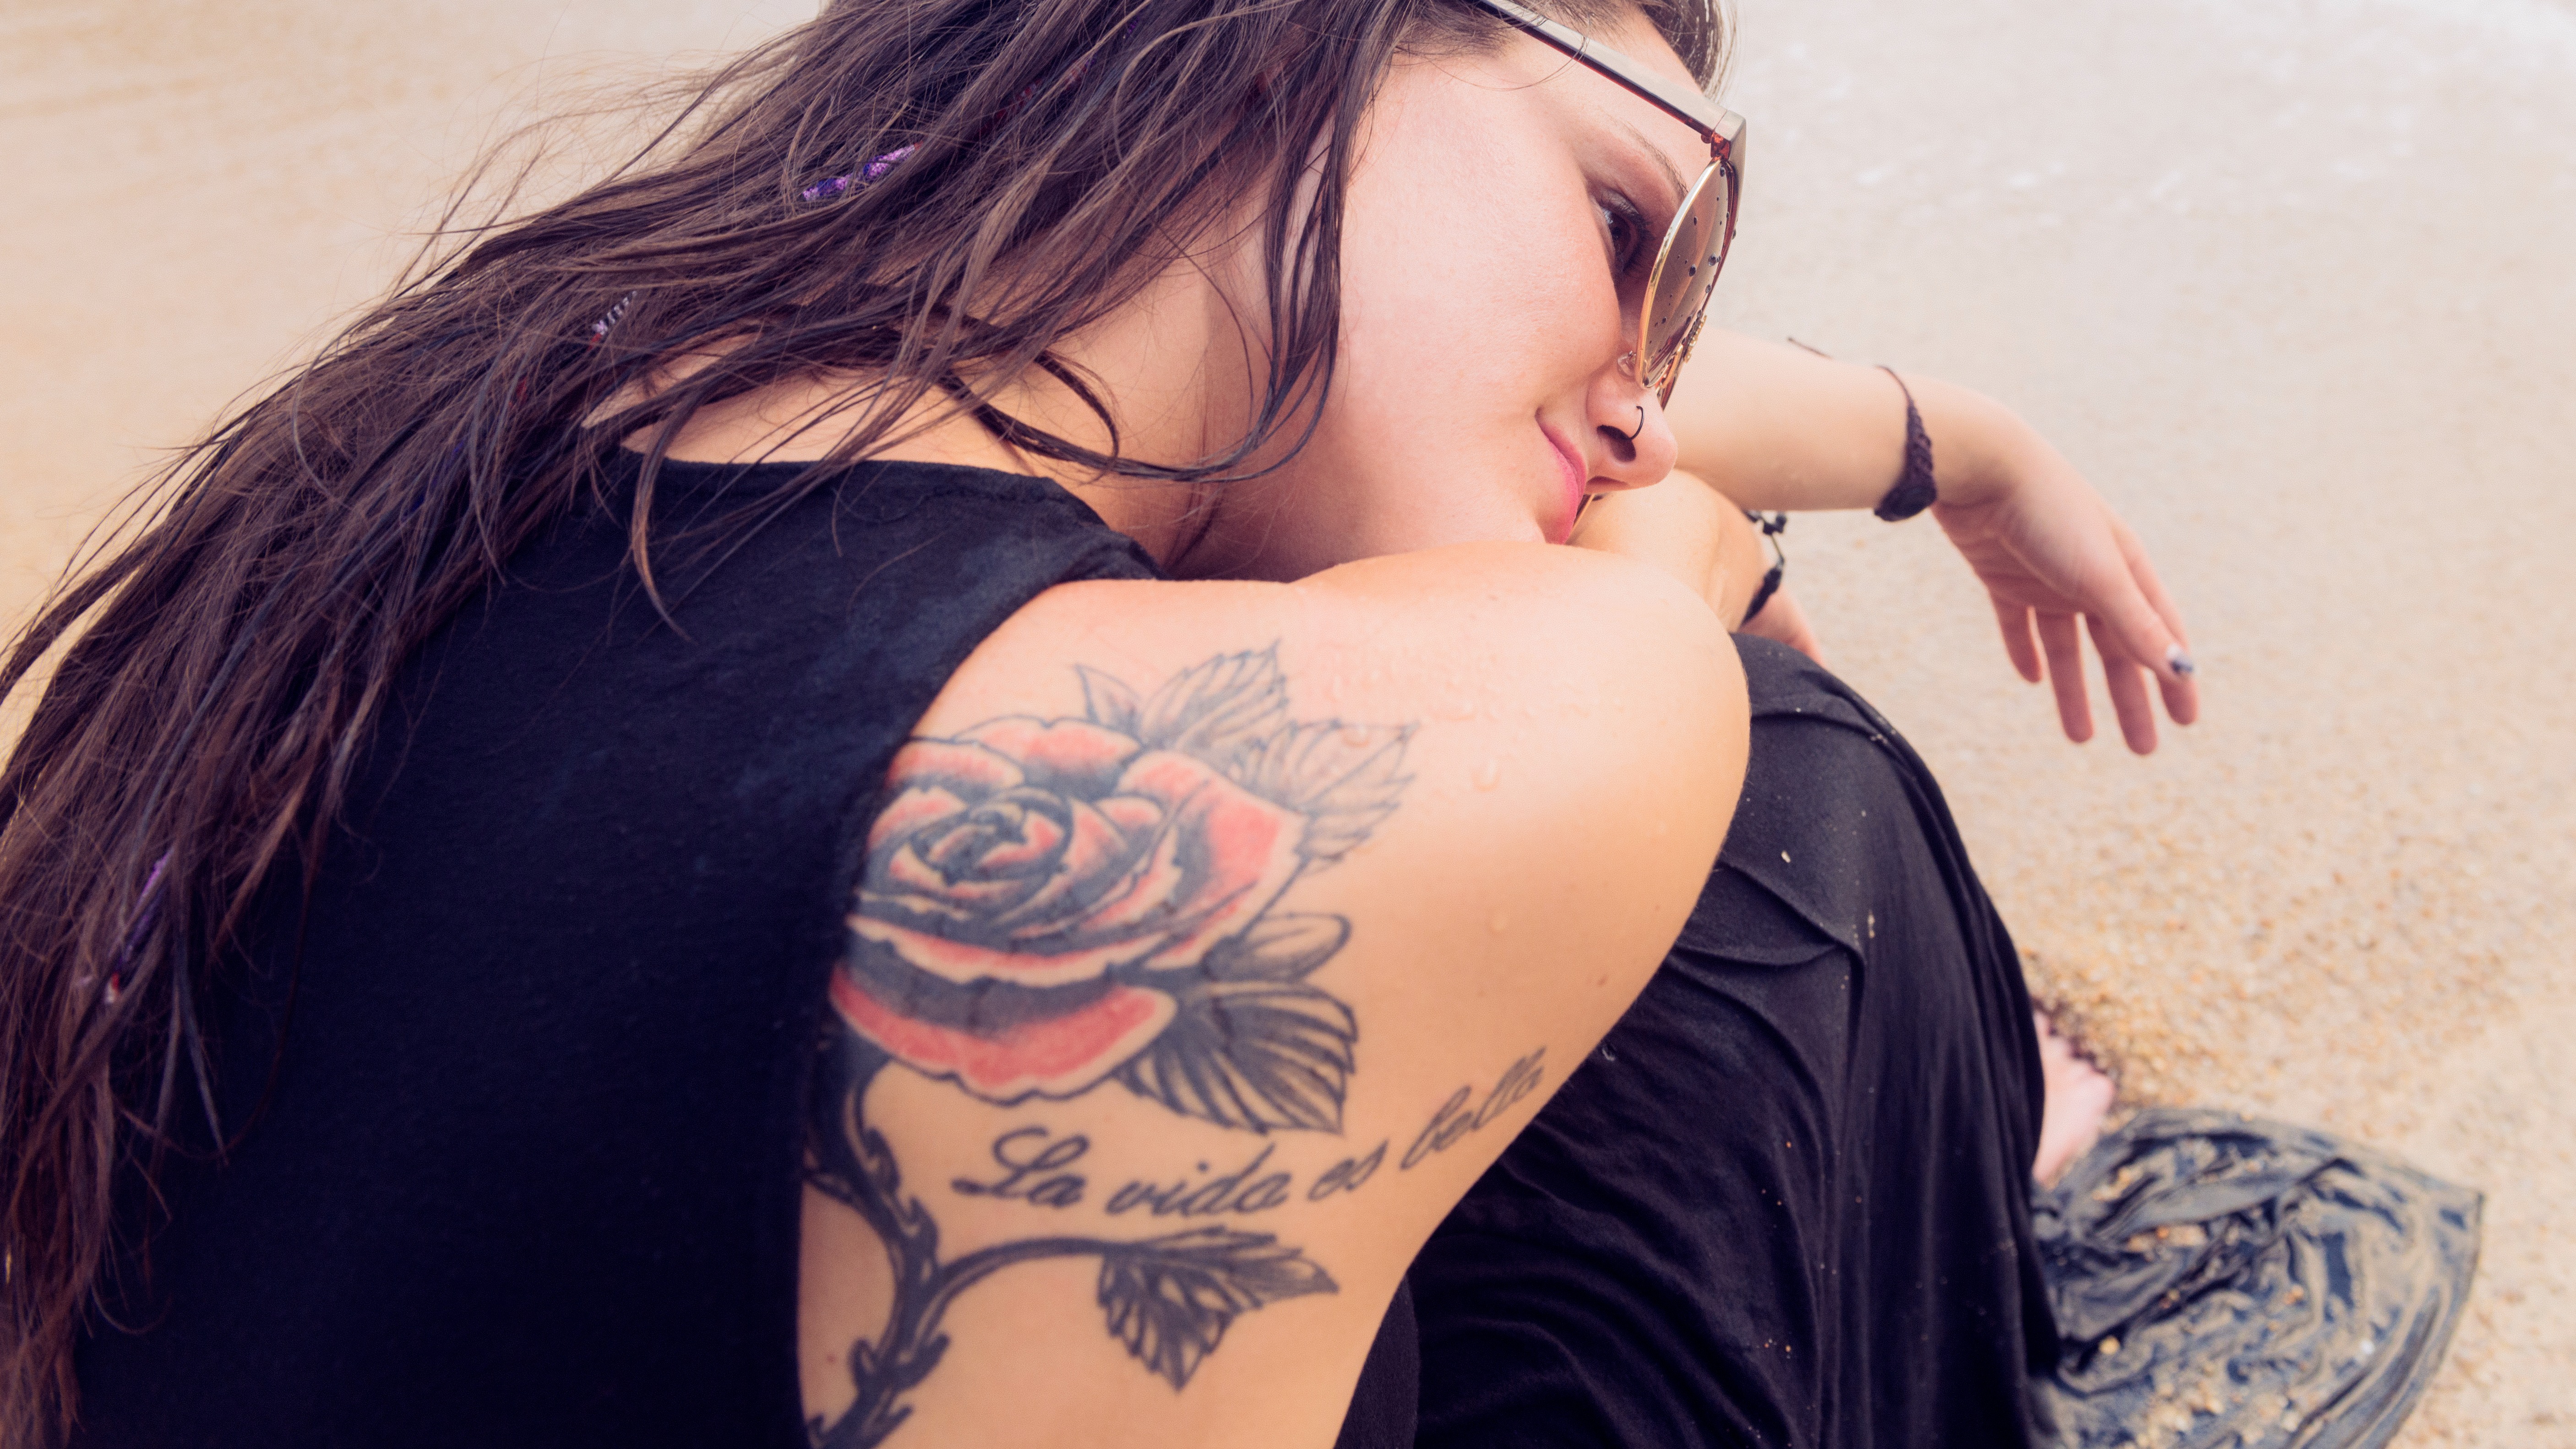 Spanish Guitar and Woman Tattoo Design – Tattoos Wizard Designs